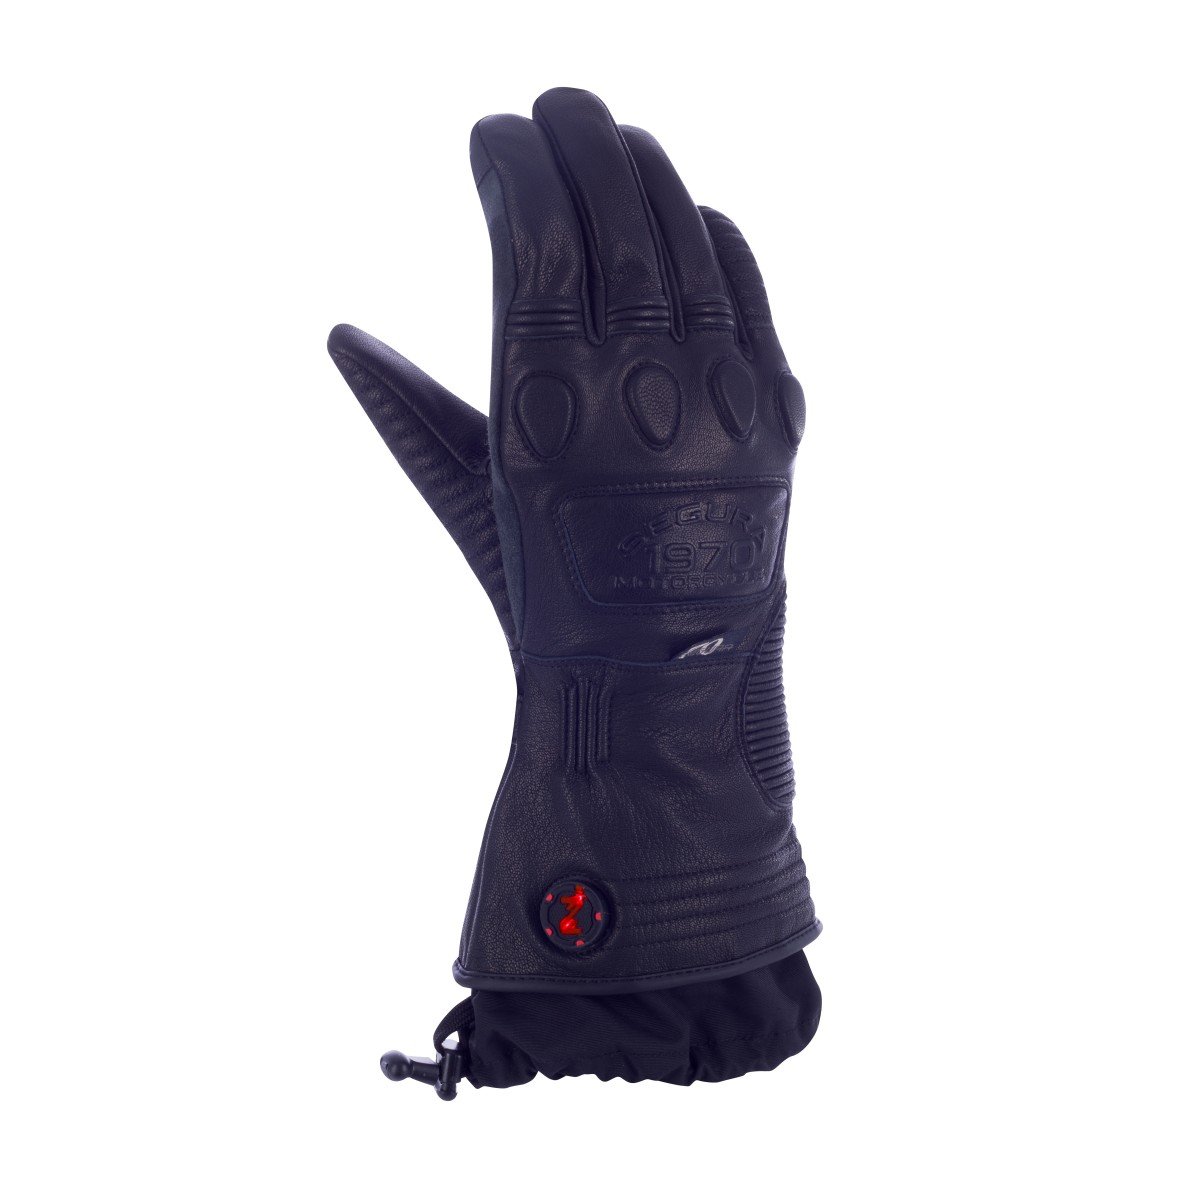 Image of Segura Shiro Black Heated Gloves Size T13 ID 3660815151860